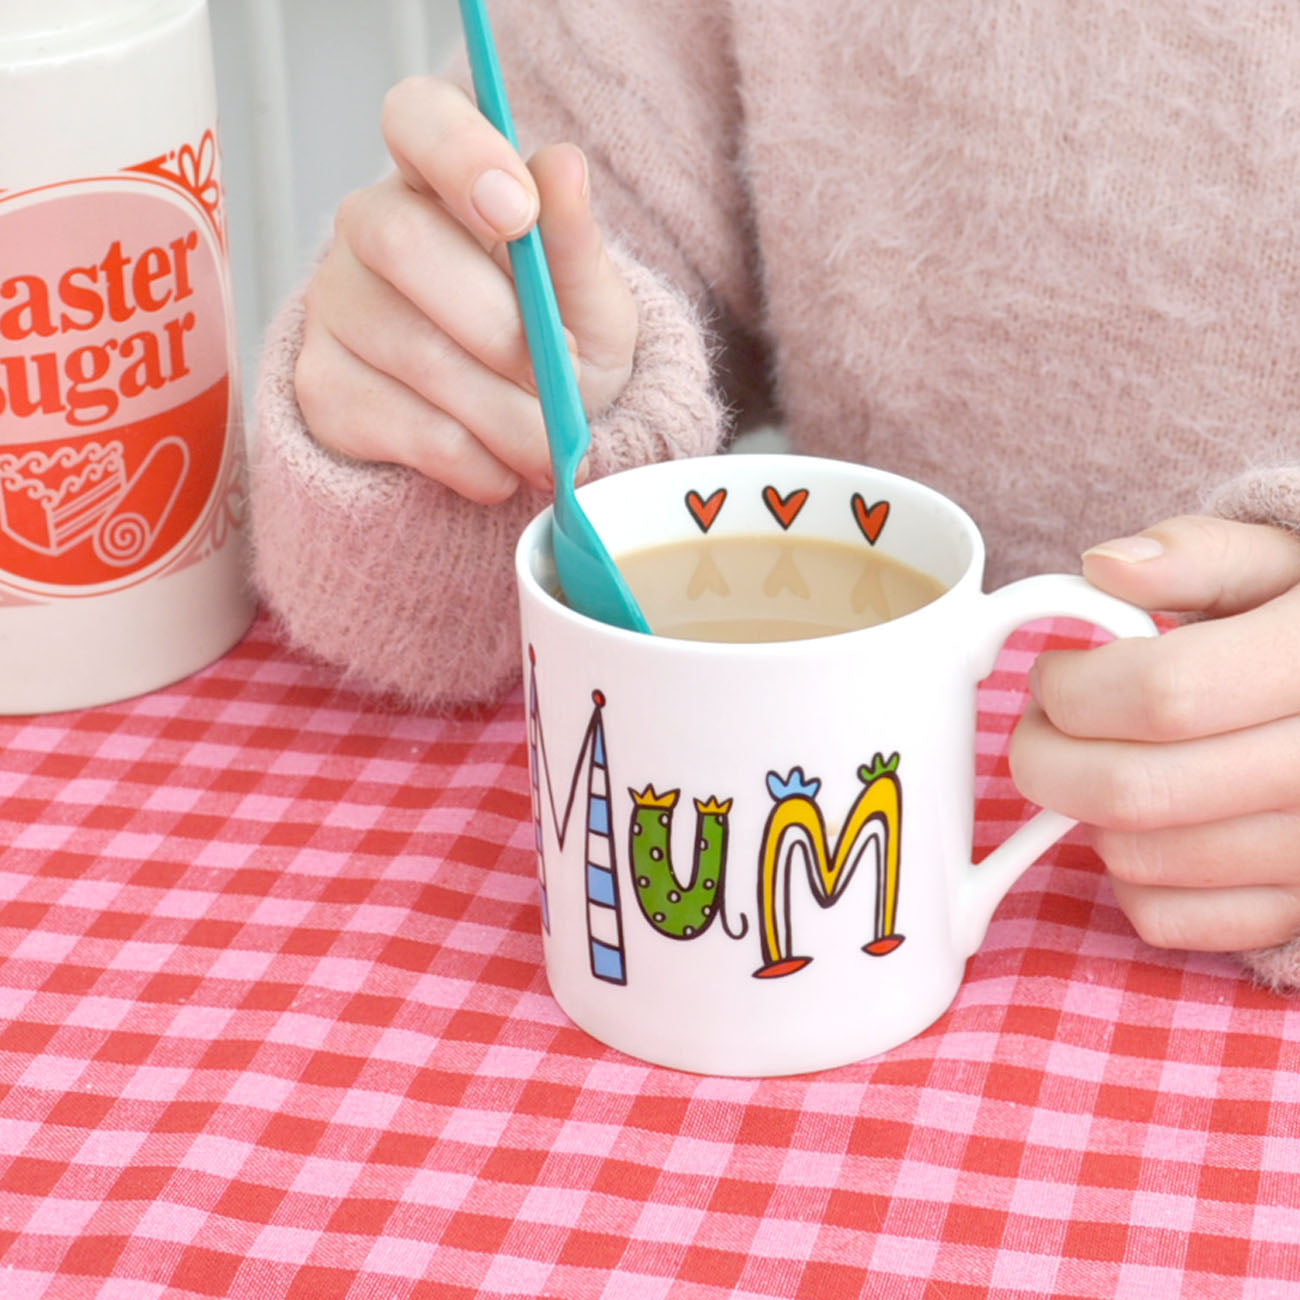 Personalised Mum Mug